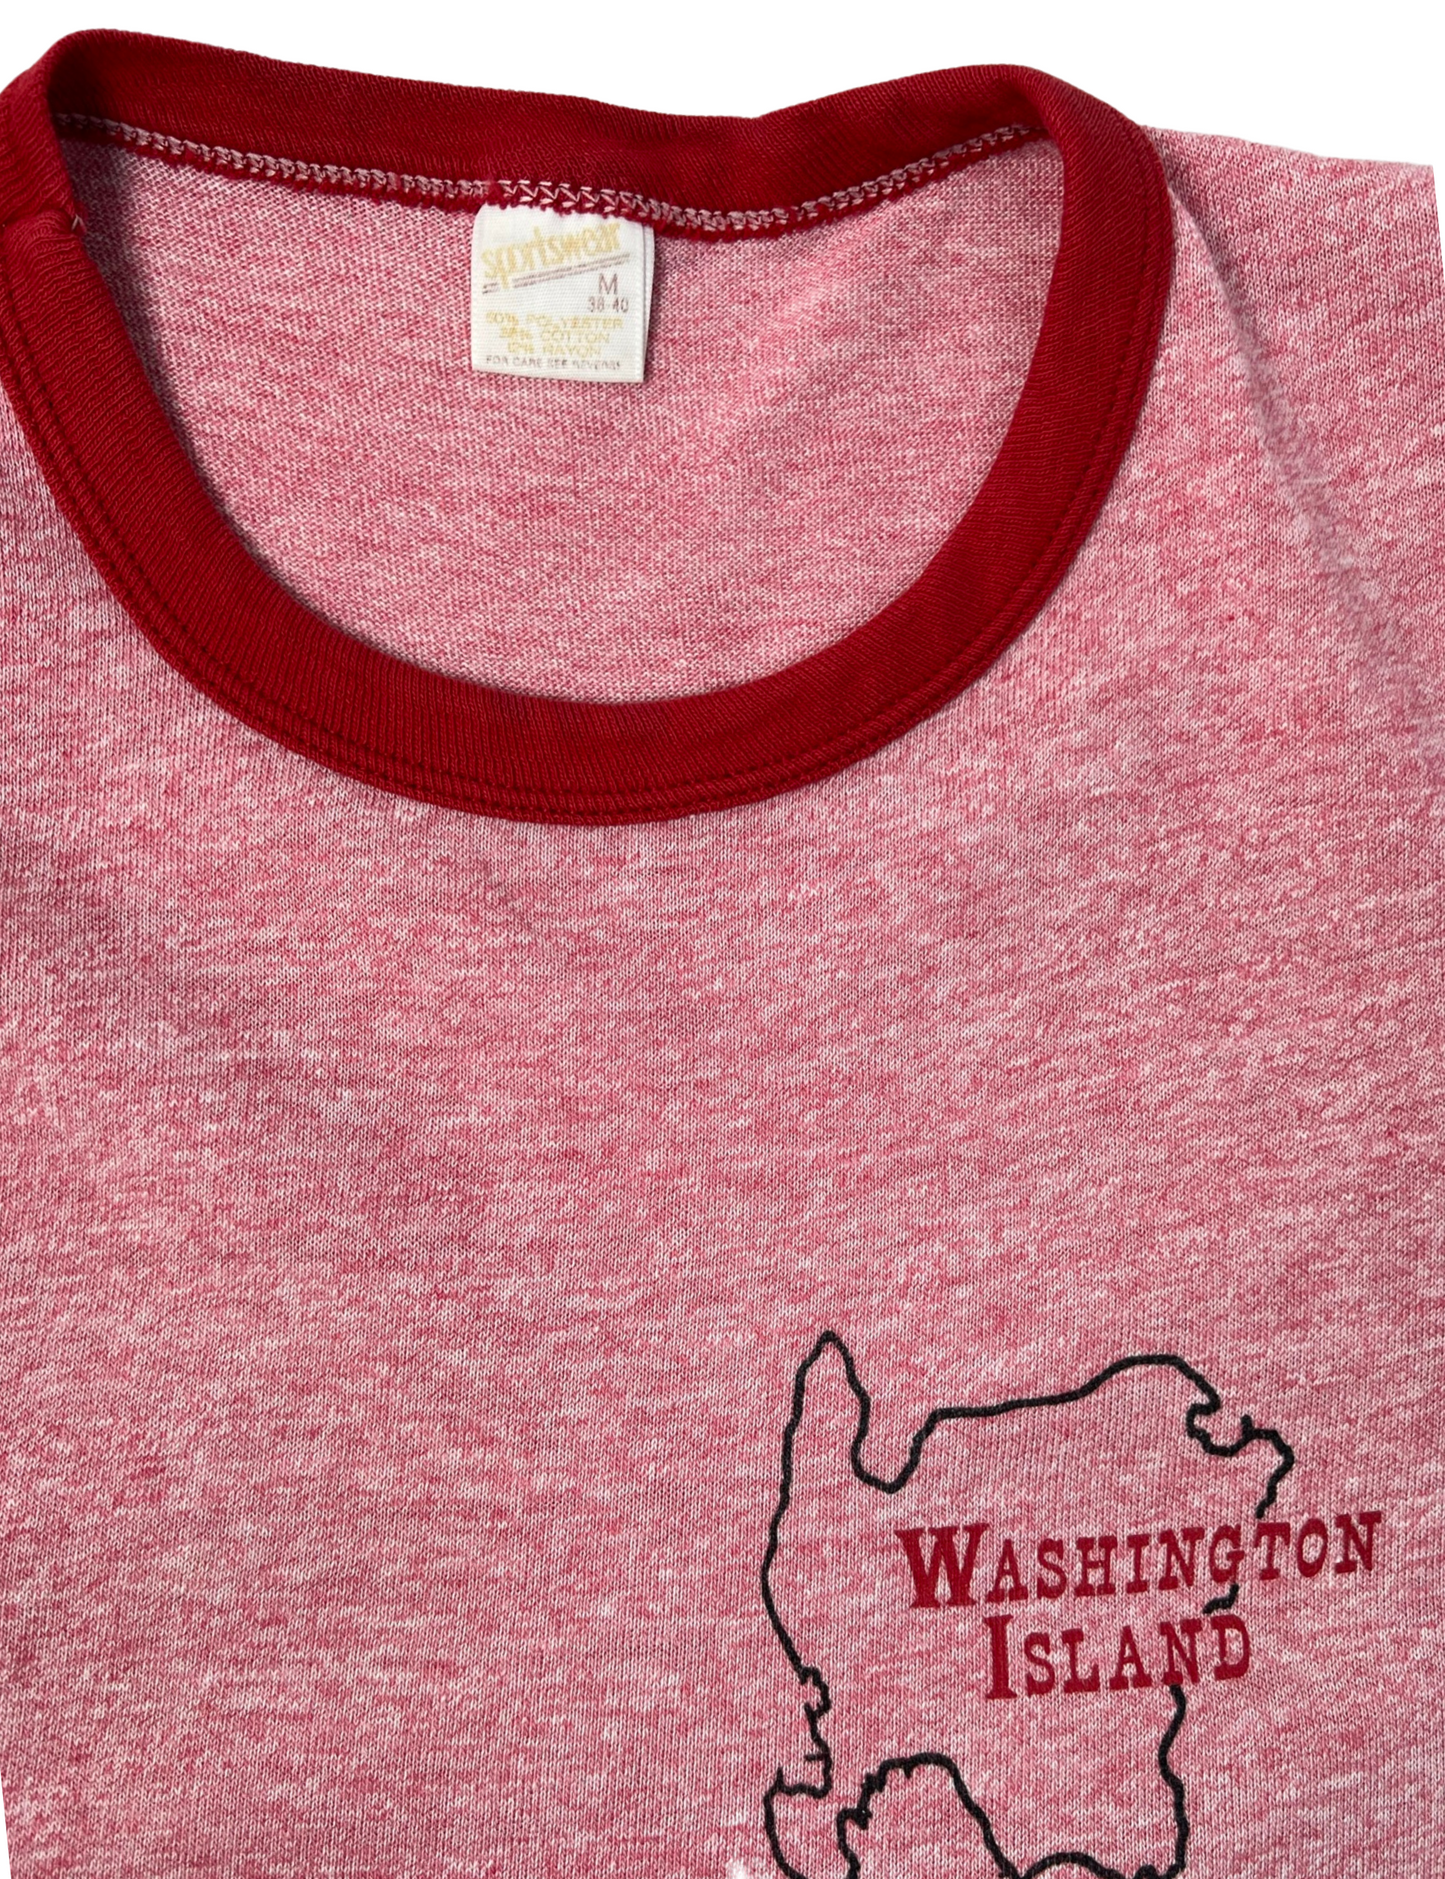 80’s Washington Island Door County Super Soft Tri-Blend Raglan Tshirt